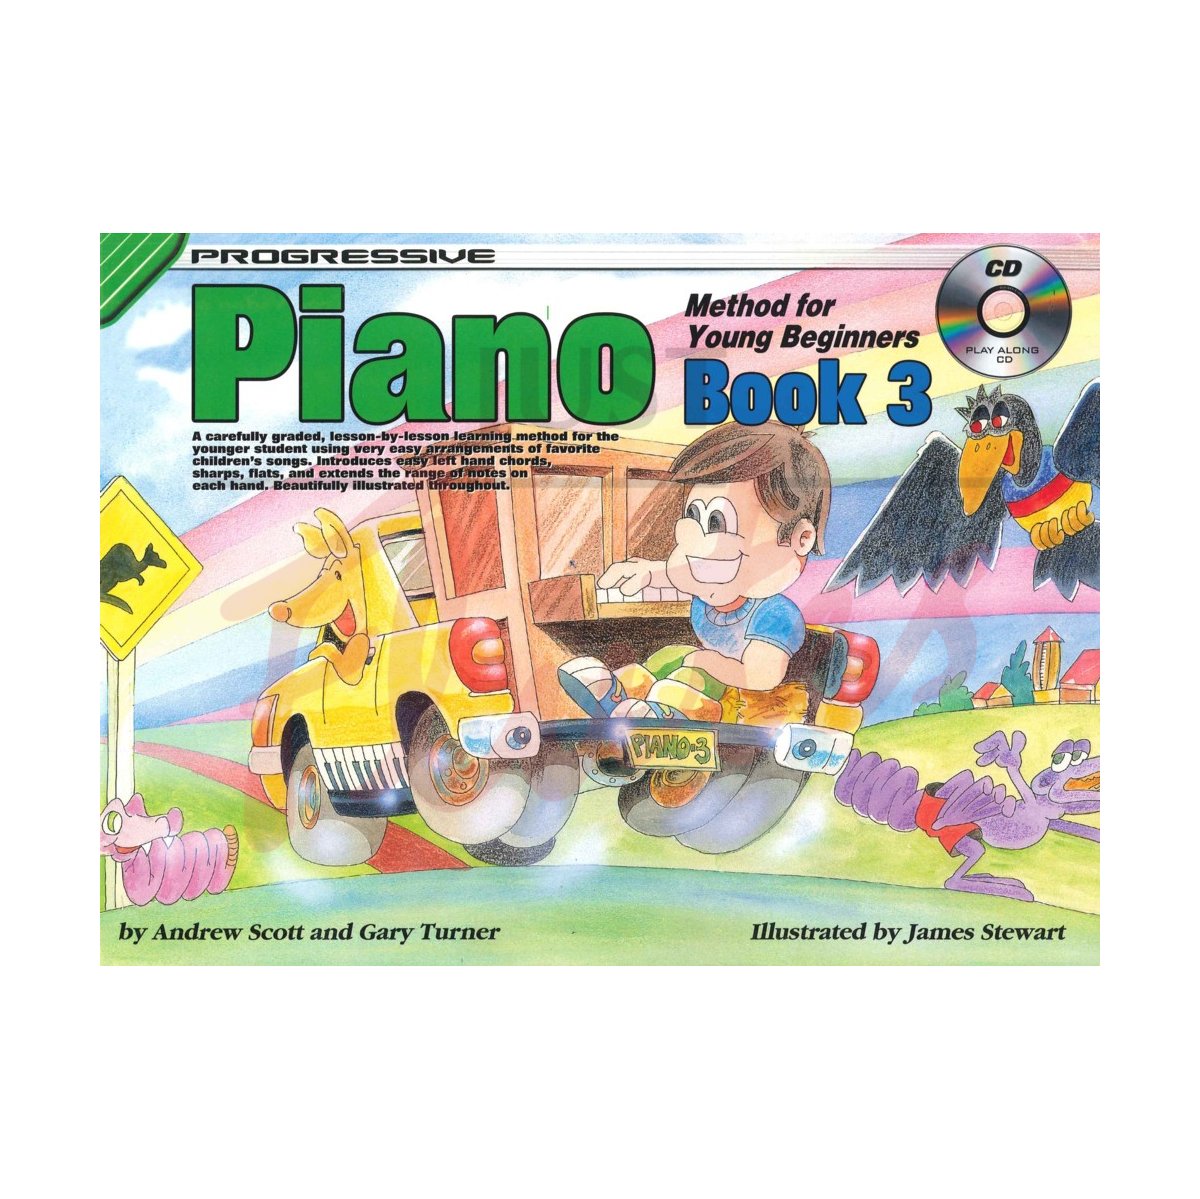 Progressive Piano Method for Young Beginners Book 3